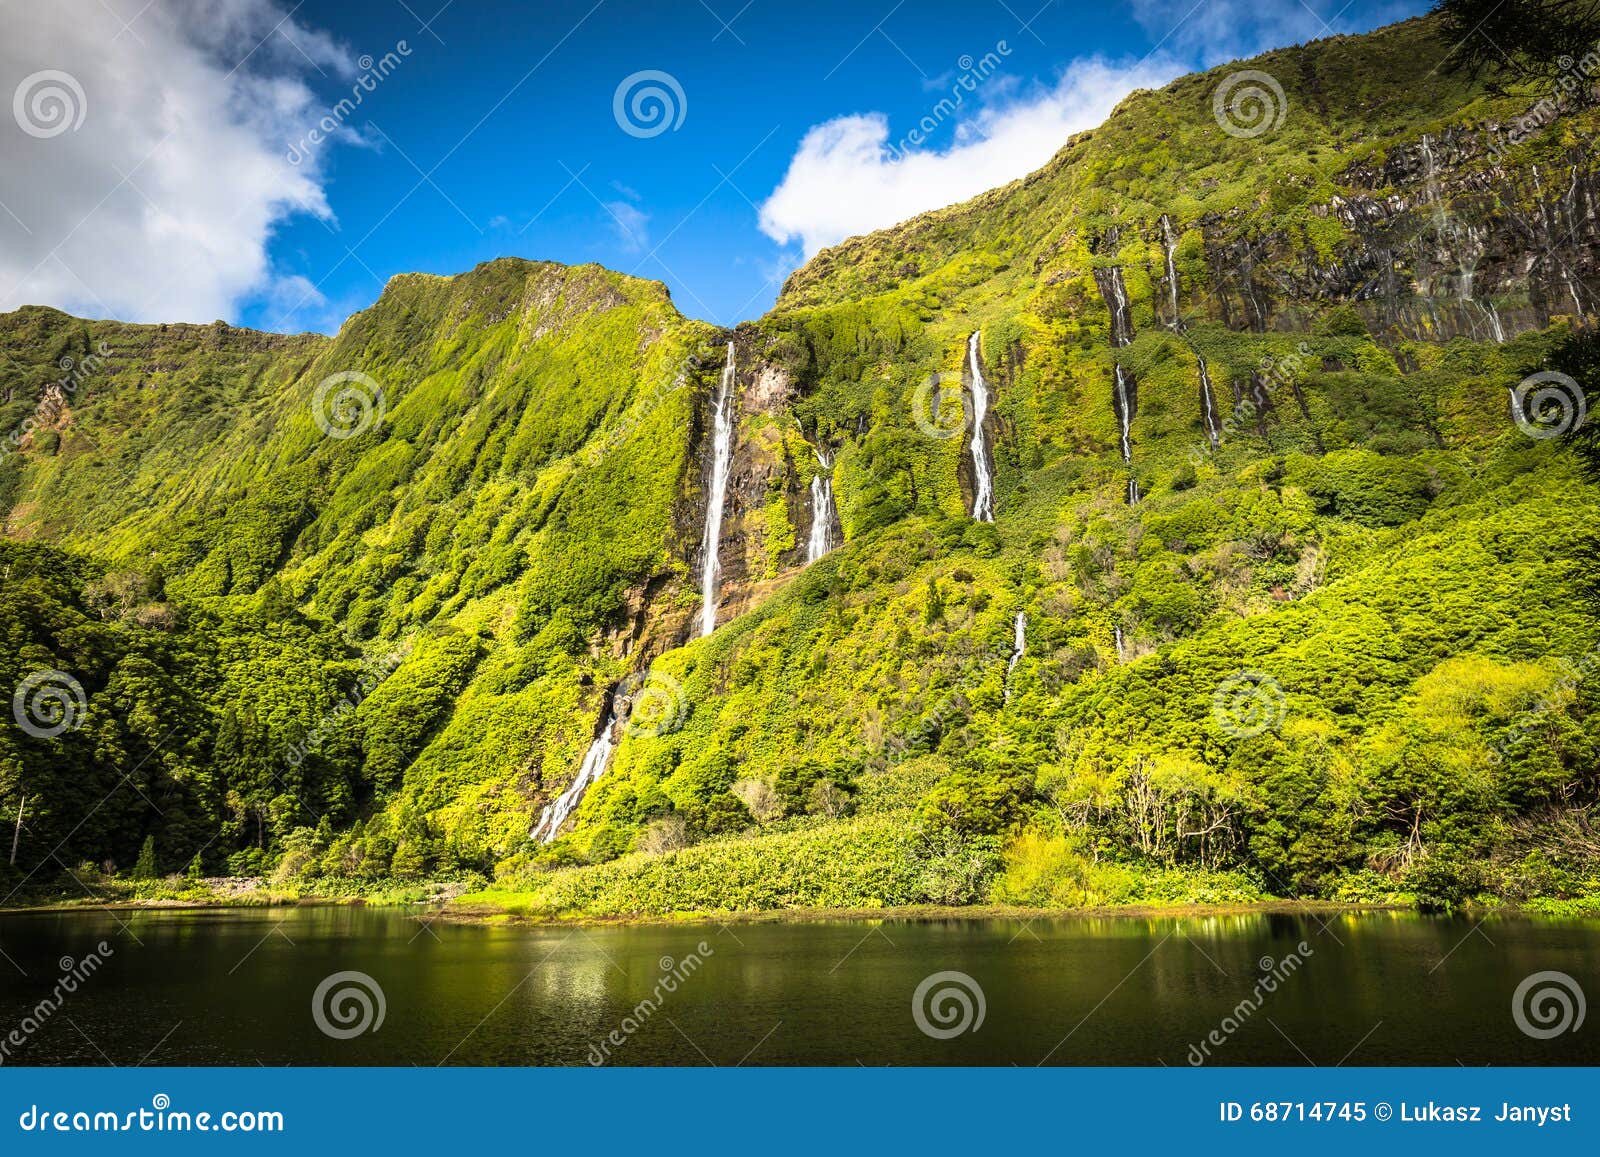 azores landscape in flores island. waterfalls in pozo da alagoinha. portugal